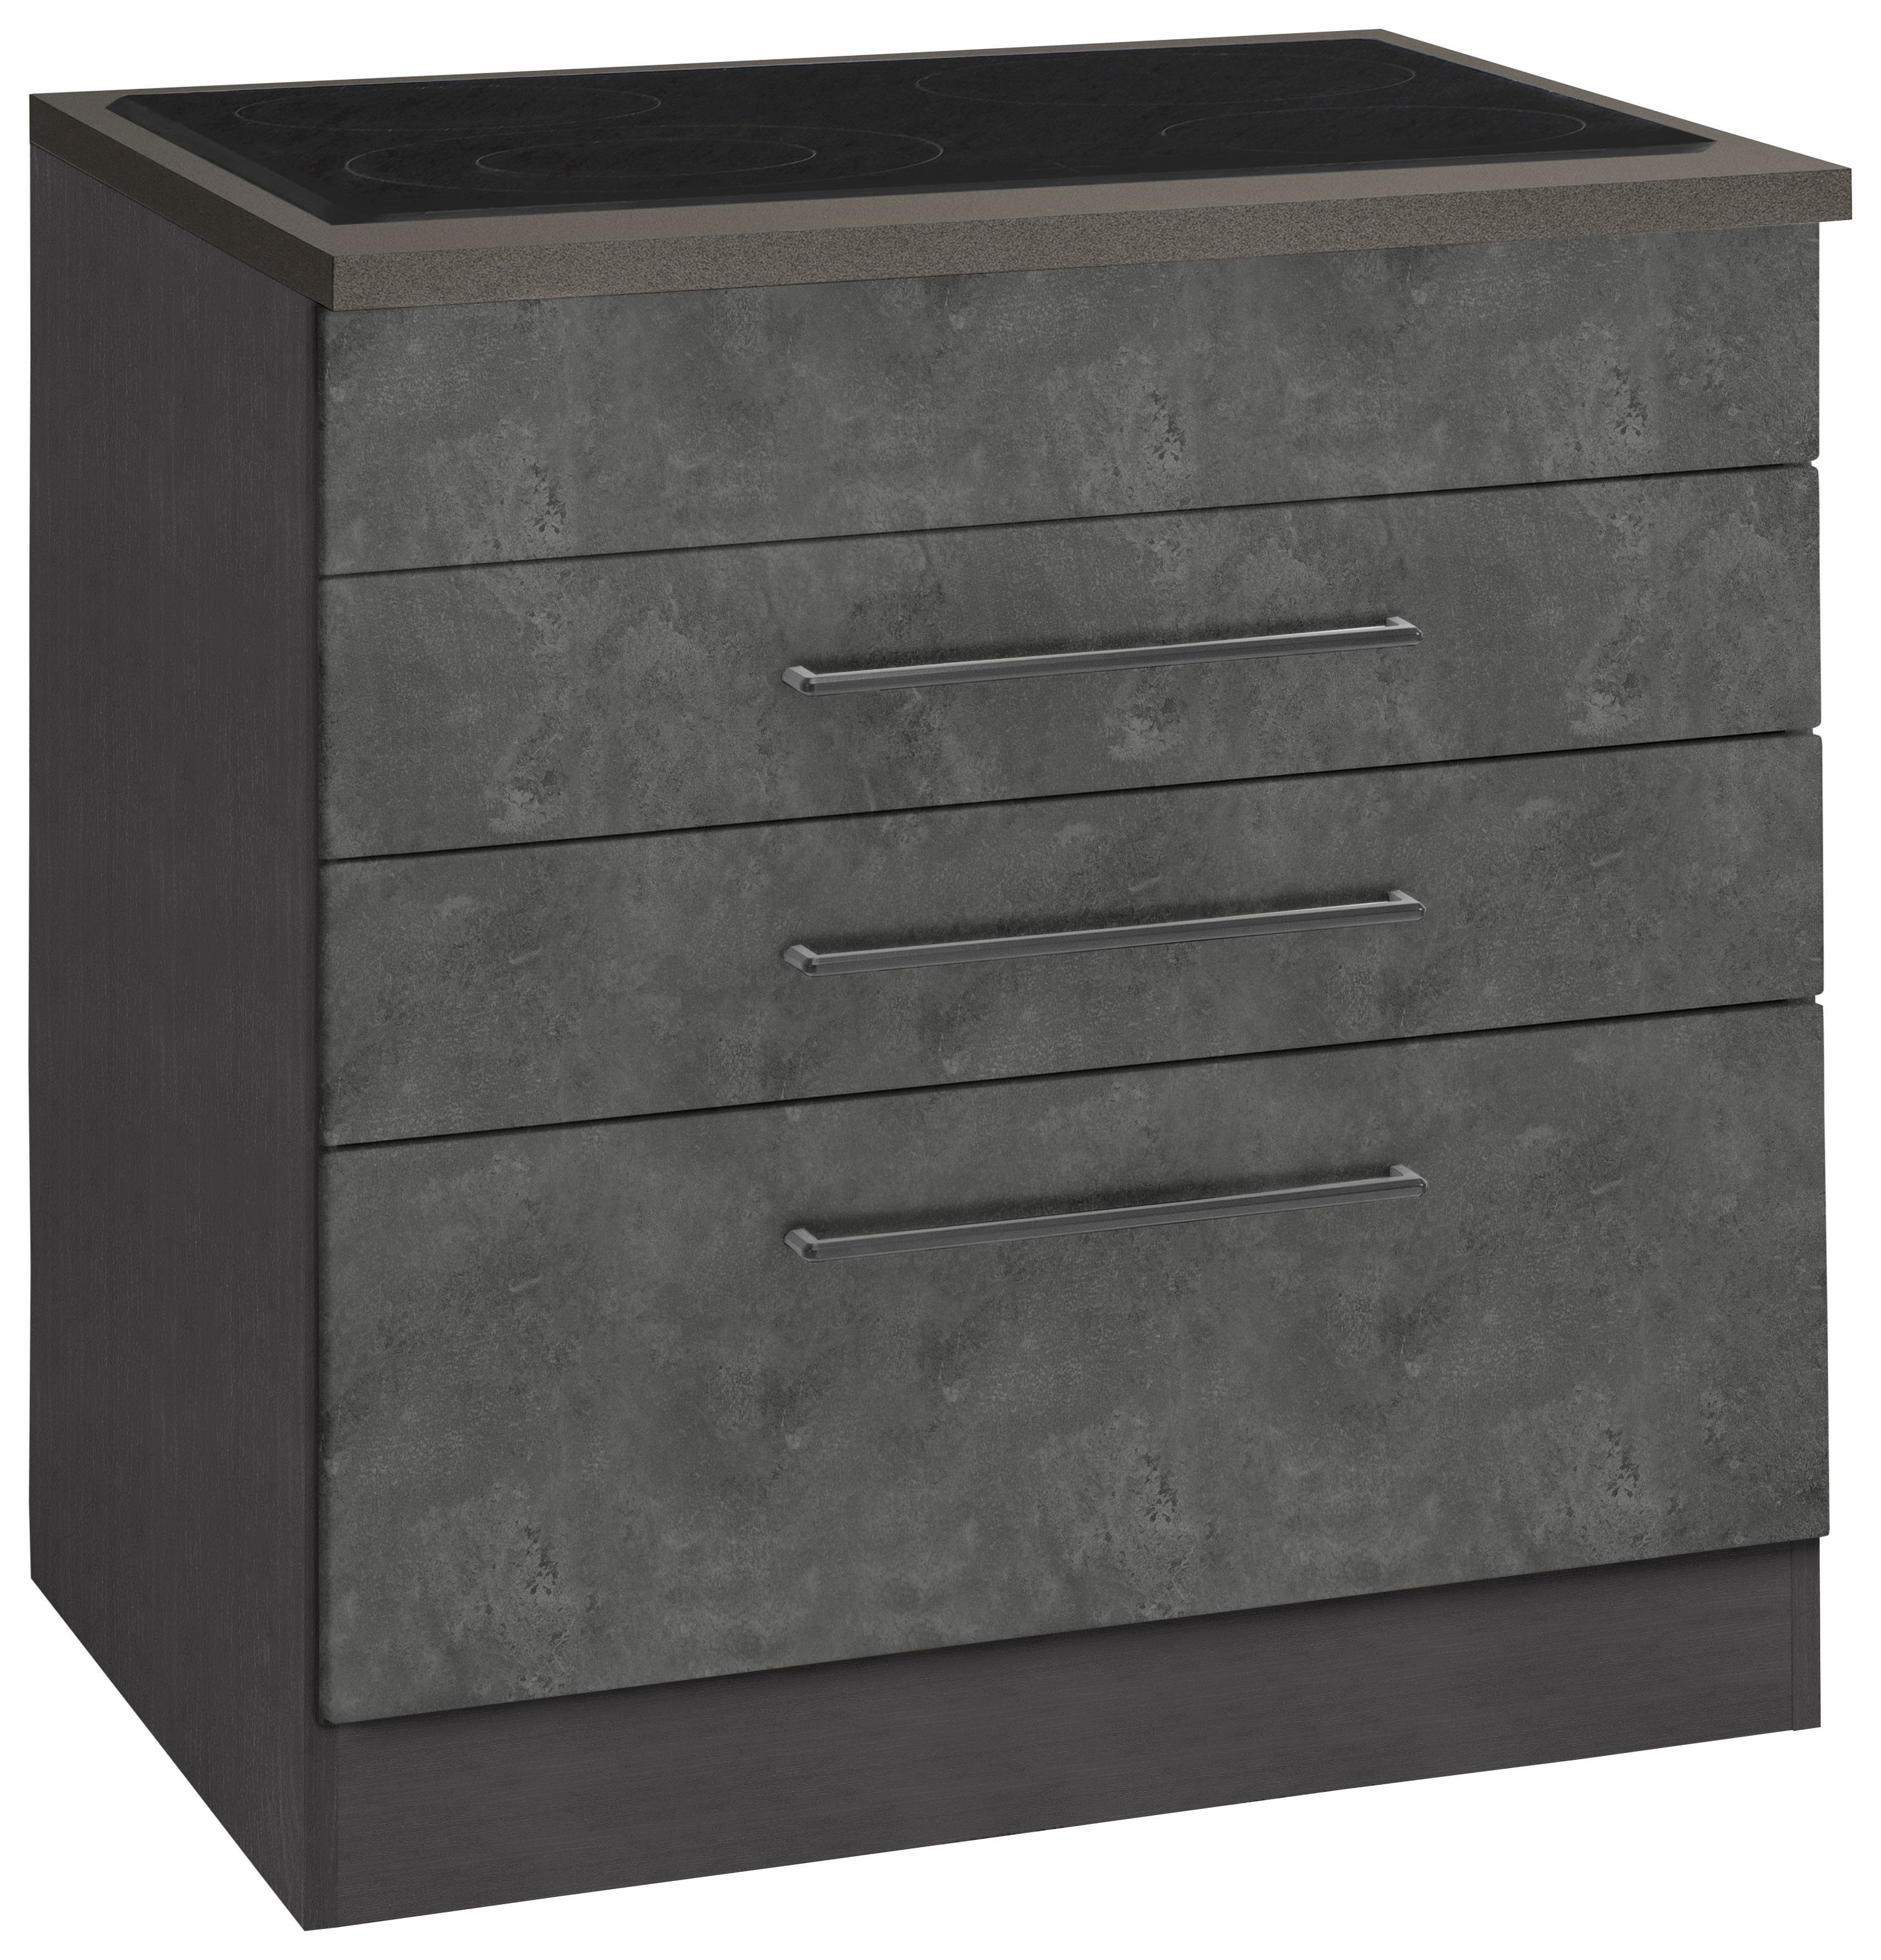 HELD MÖBEL Kochfeldumbauschrank Tulsa 80 cm breit, 2 Schubladen, 1 großer Auszug, schwarzer Metallgriff betonfarben dunkel | grafit | Kochfeldumbauschränke